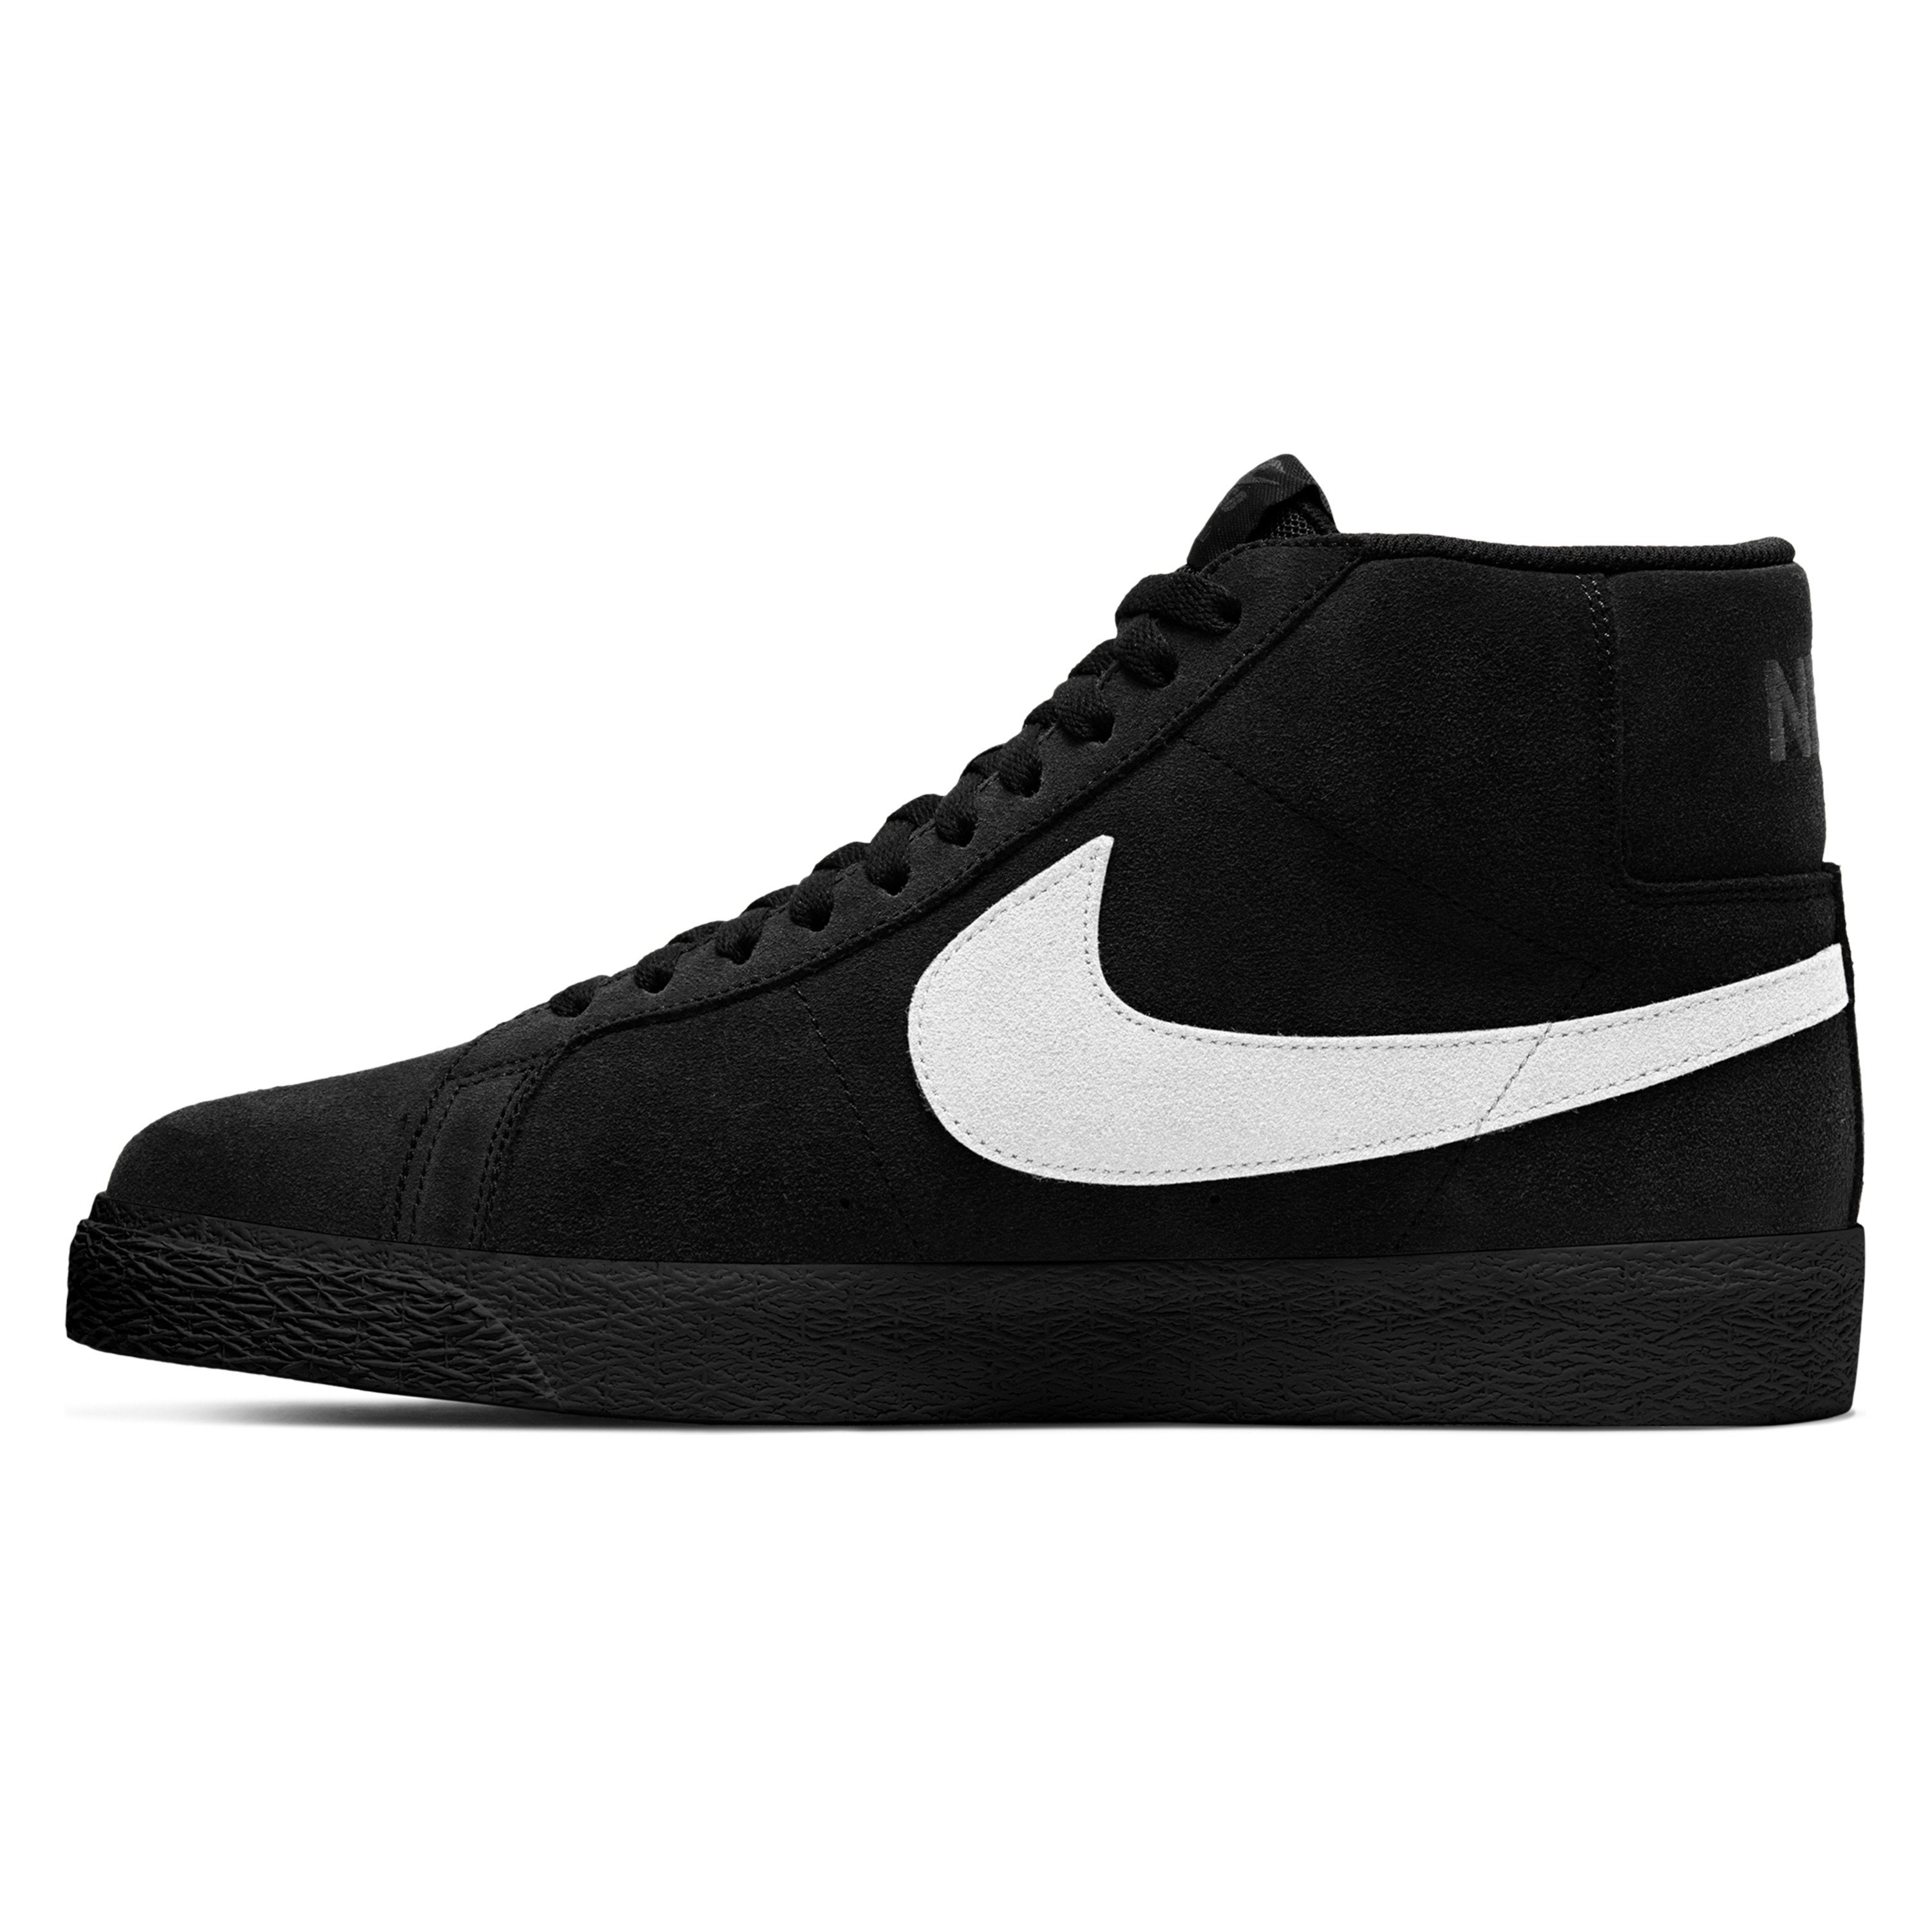 Nike SB Blazer Zoom Mid (Black/White-Black-Black) - 864349-007 - Consortium